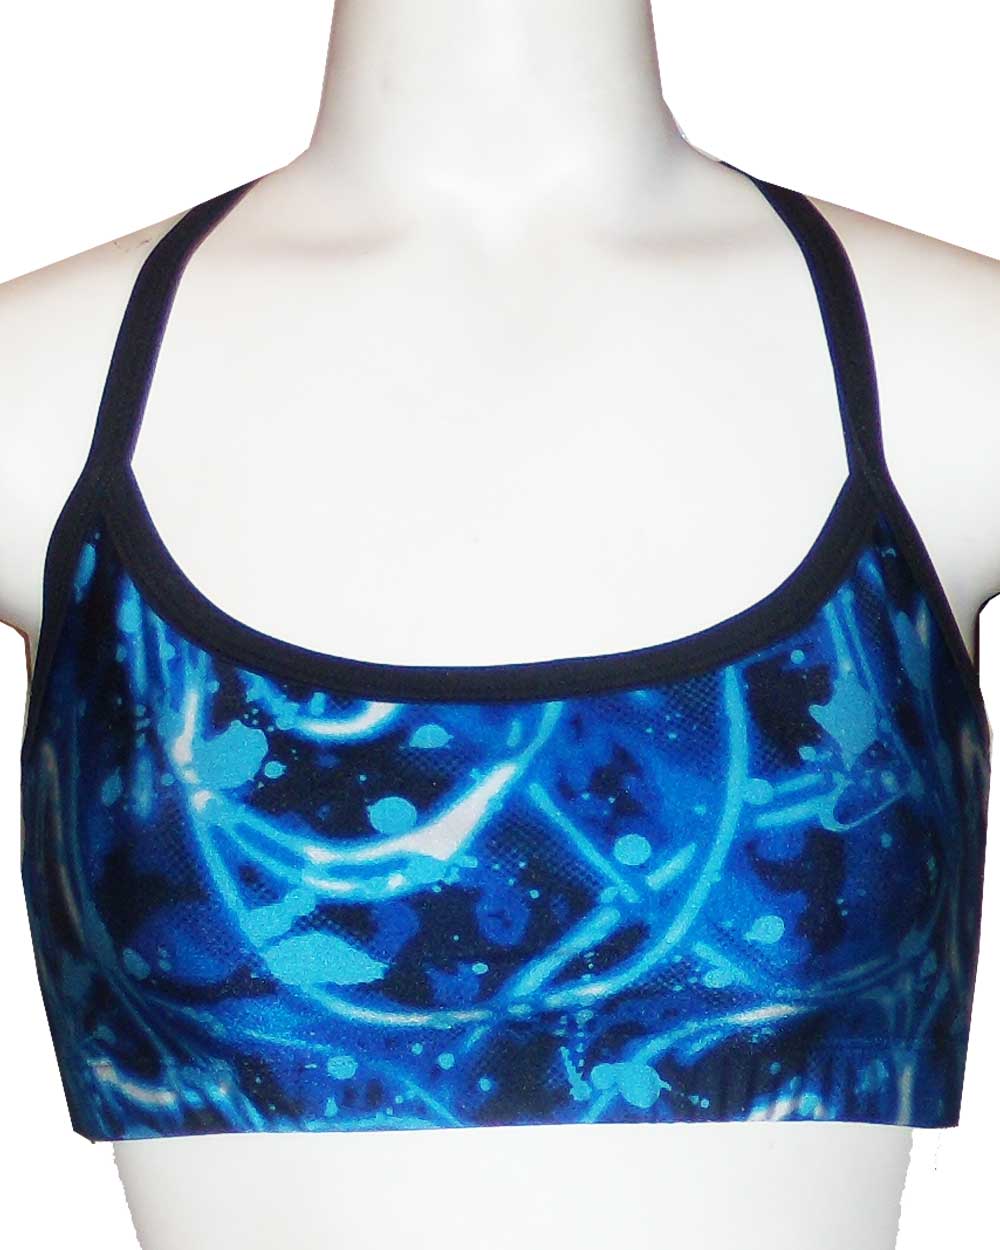 Galaxy blue sports bra, hot yoga top